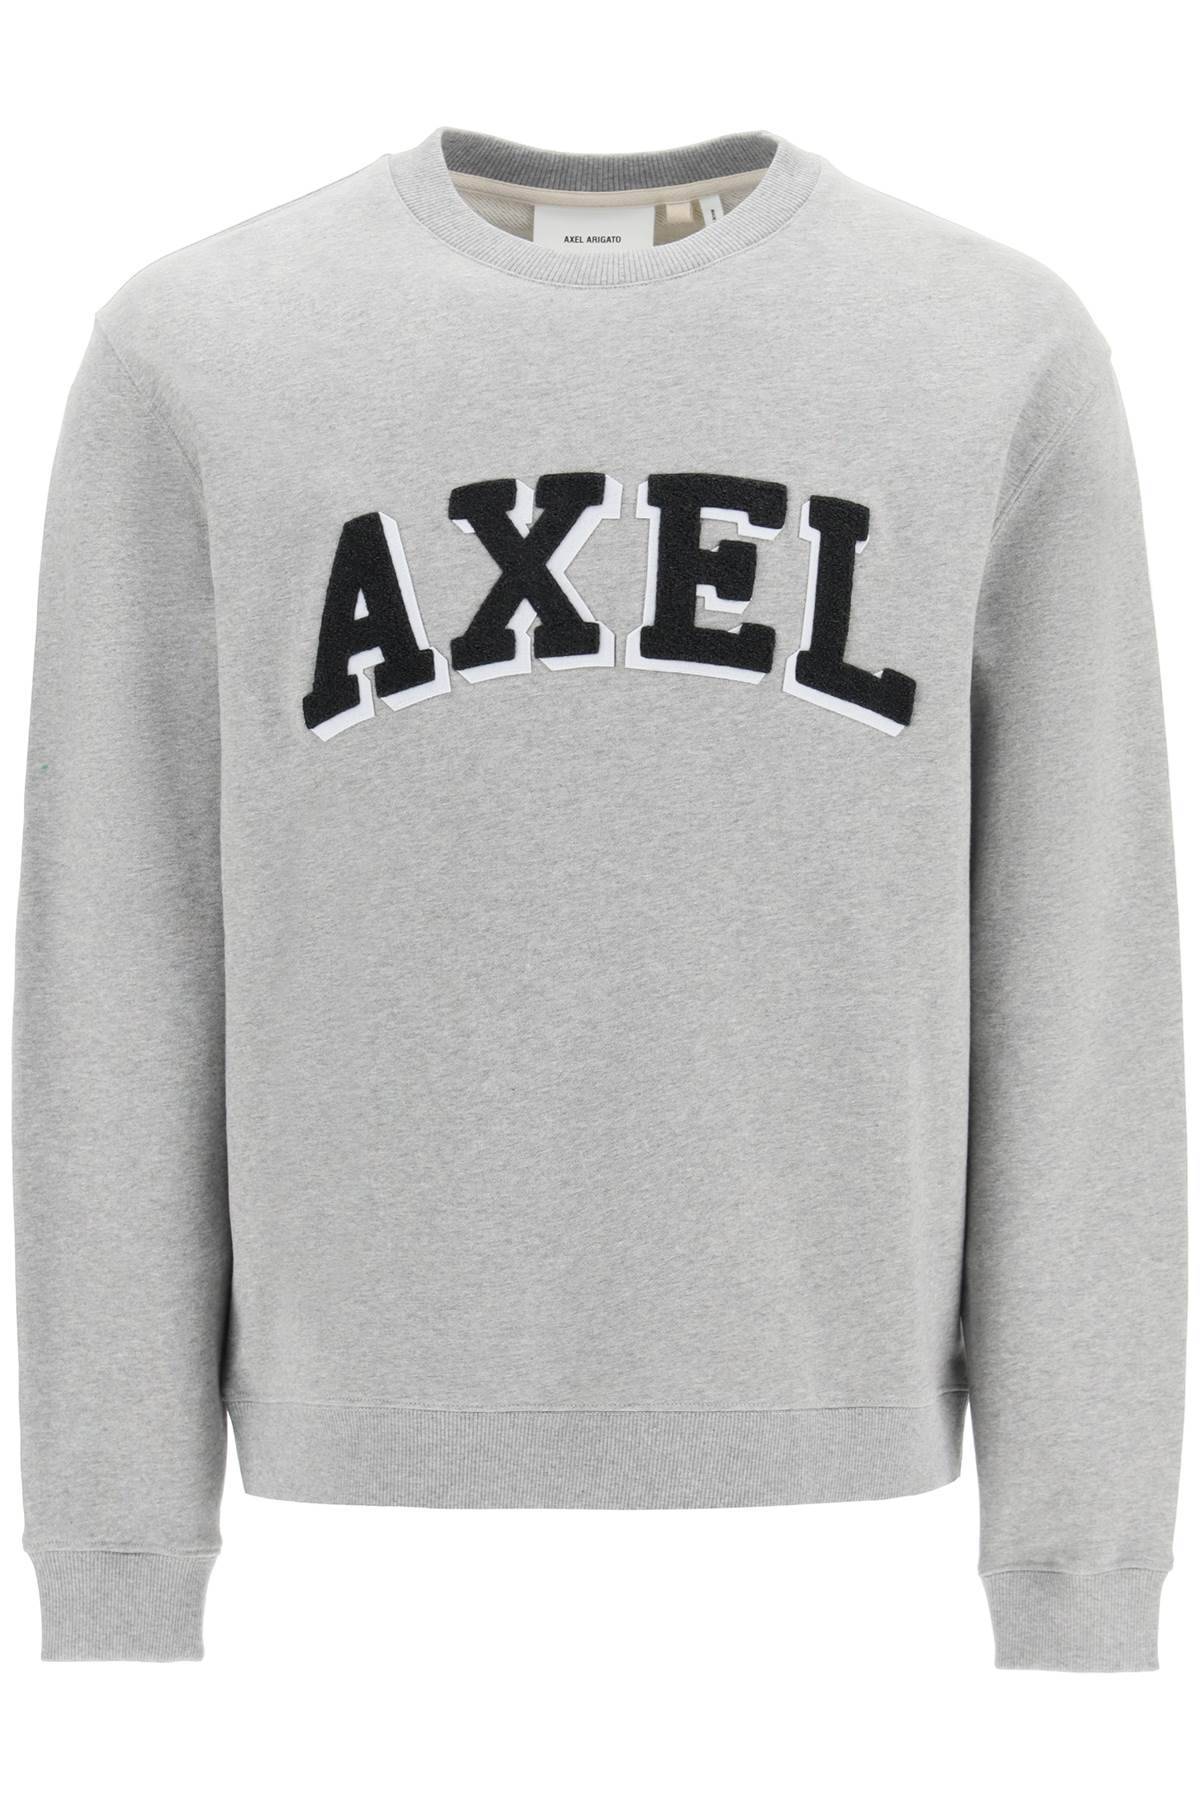 Axel Arigato AXEL ARIGATO logo patch sweatshirt